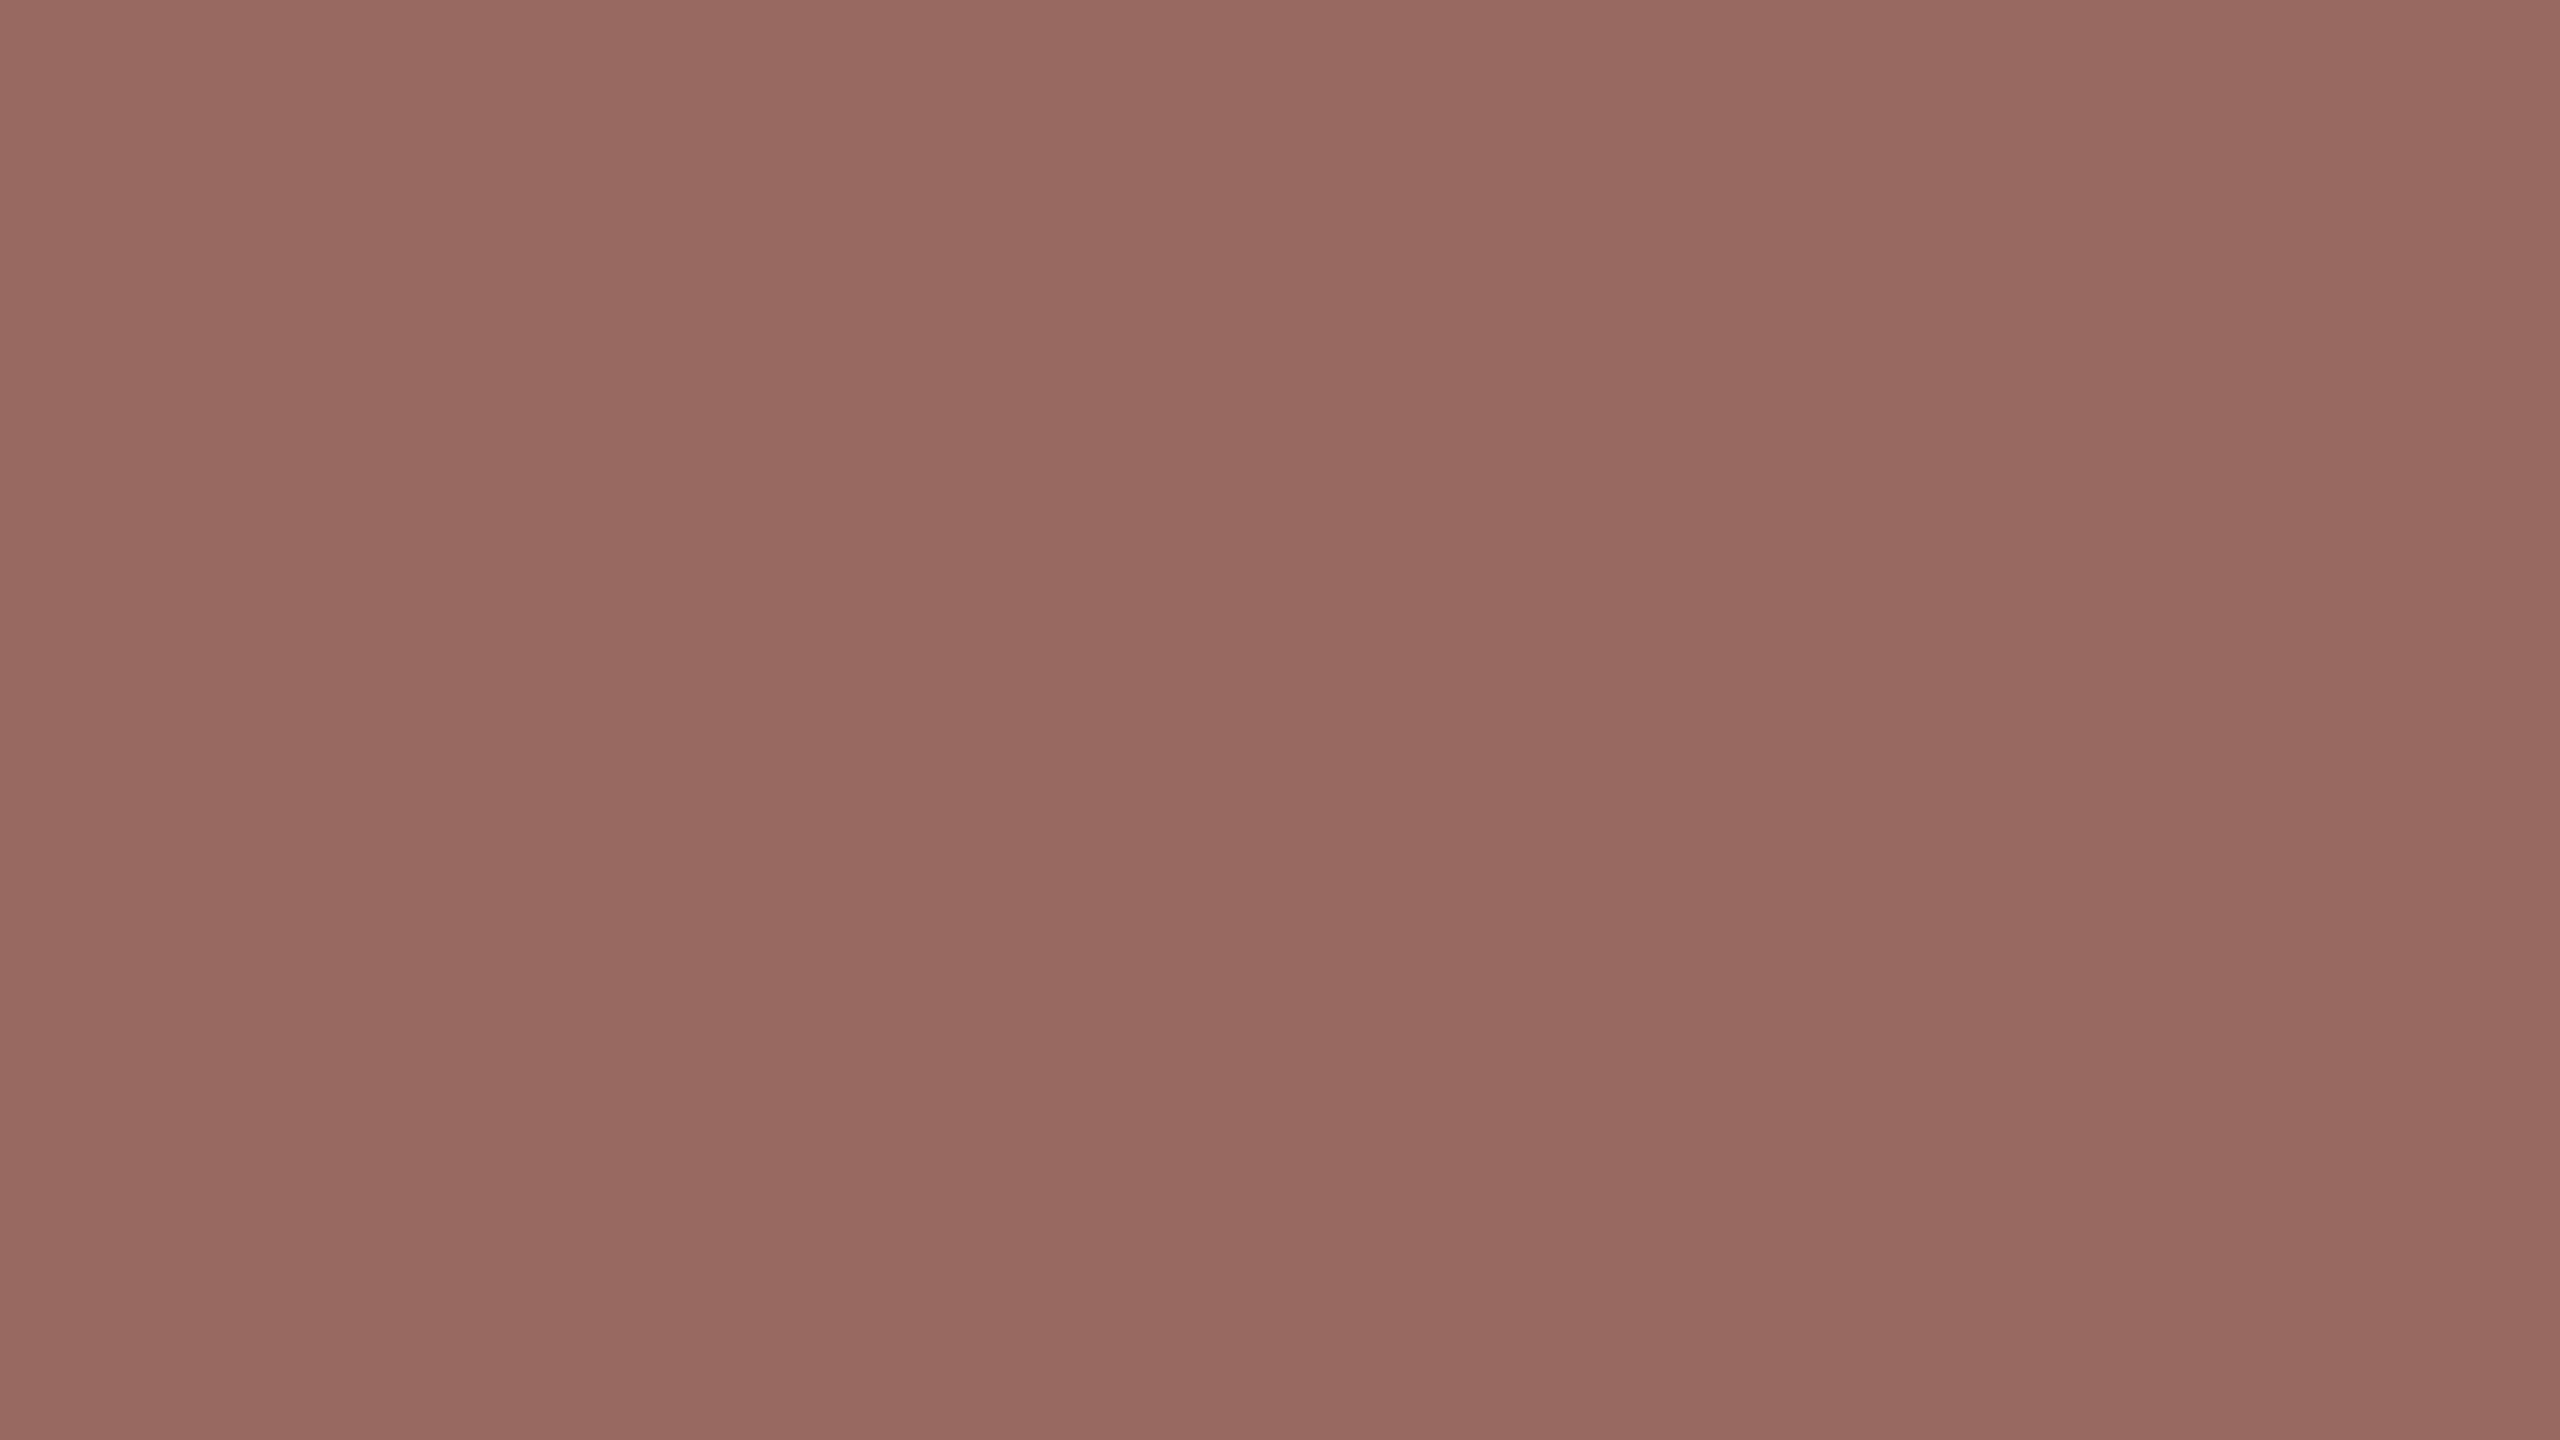 2560x1440 Dark Chestnut Solid Color Background